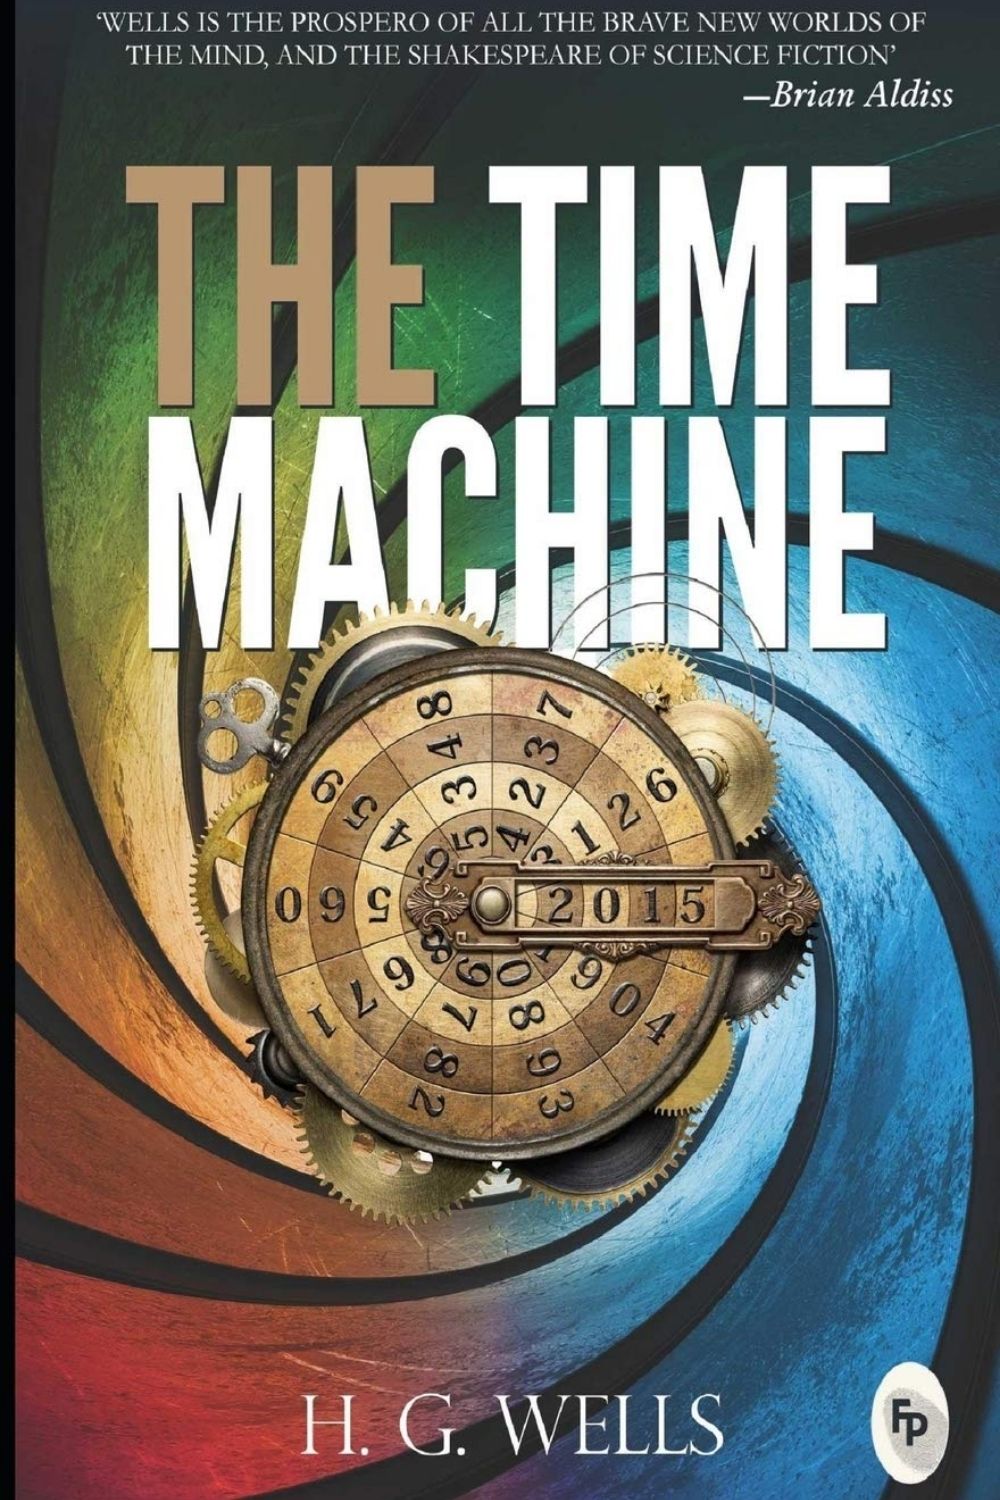 Science Fiction Novels Based On Time Travel